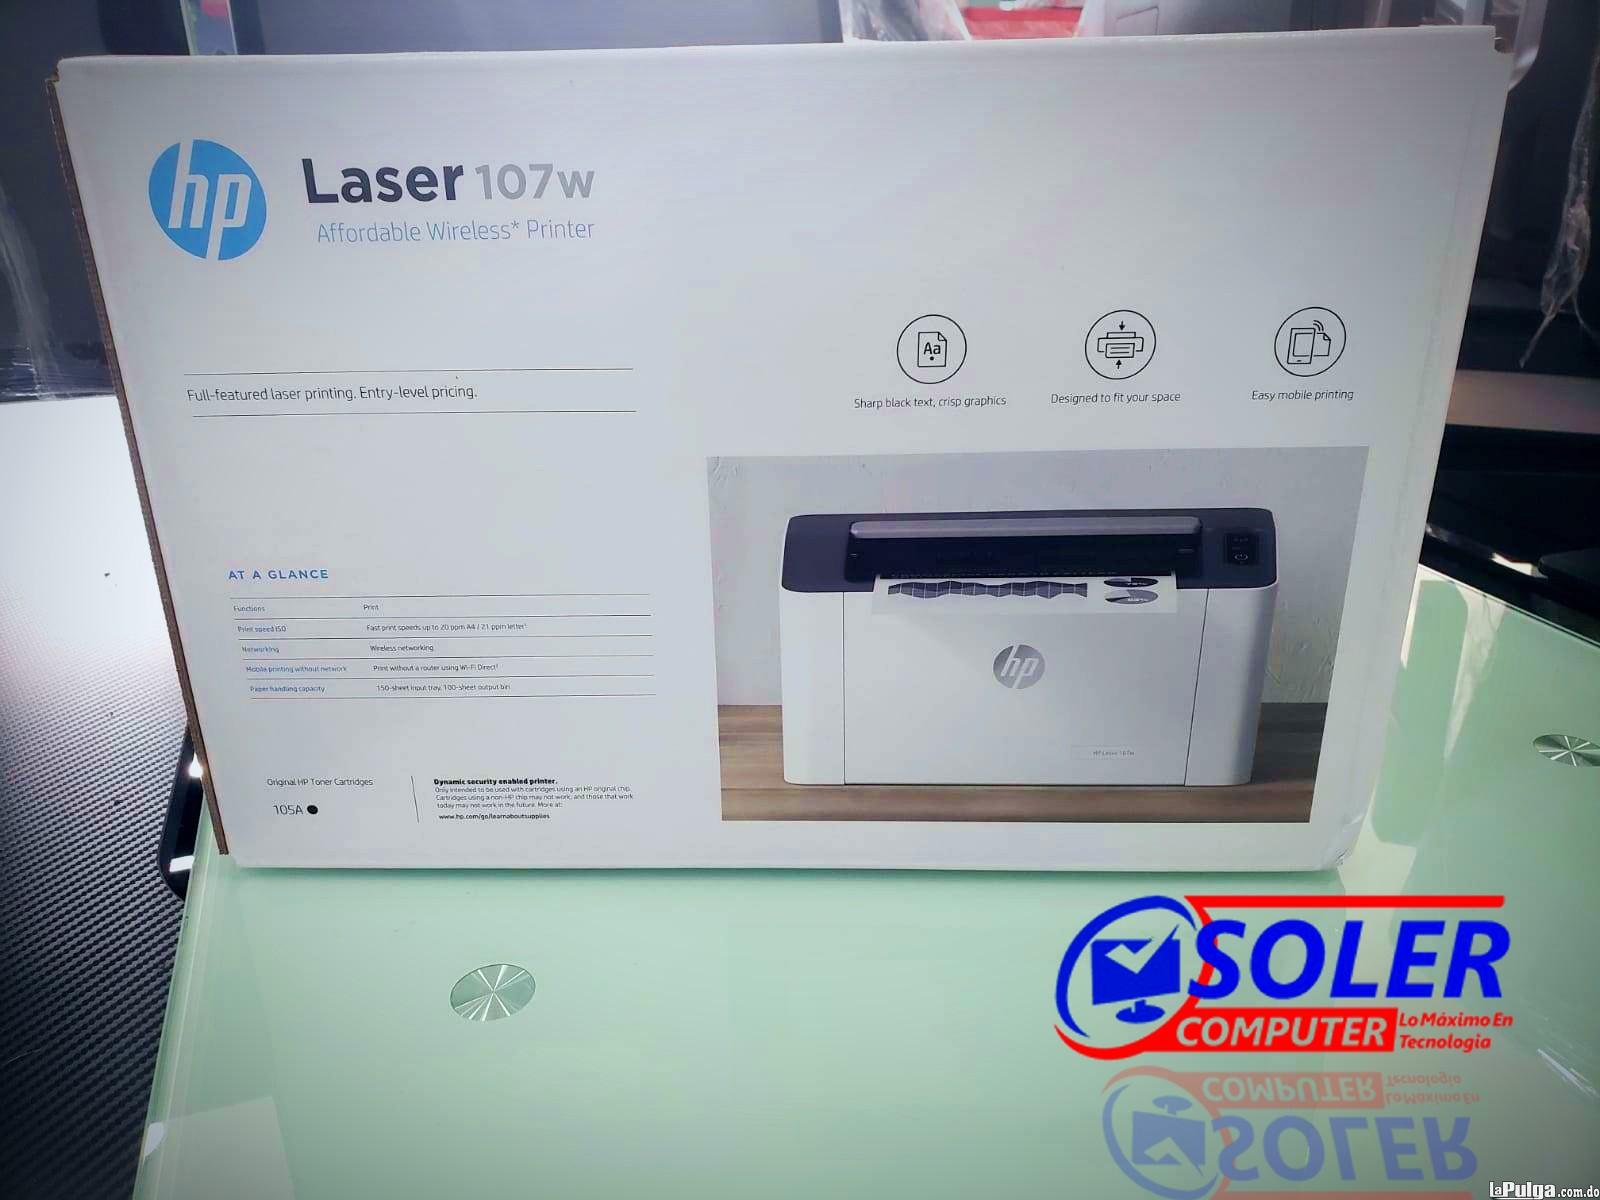   Impresora Laser 107w   Foto 7138331-1.jpg